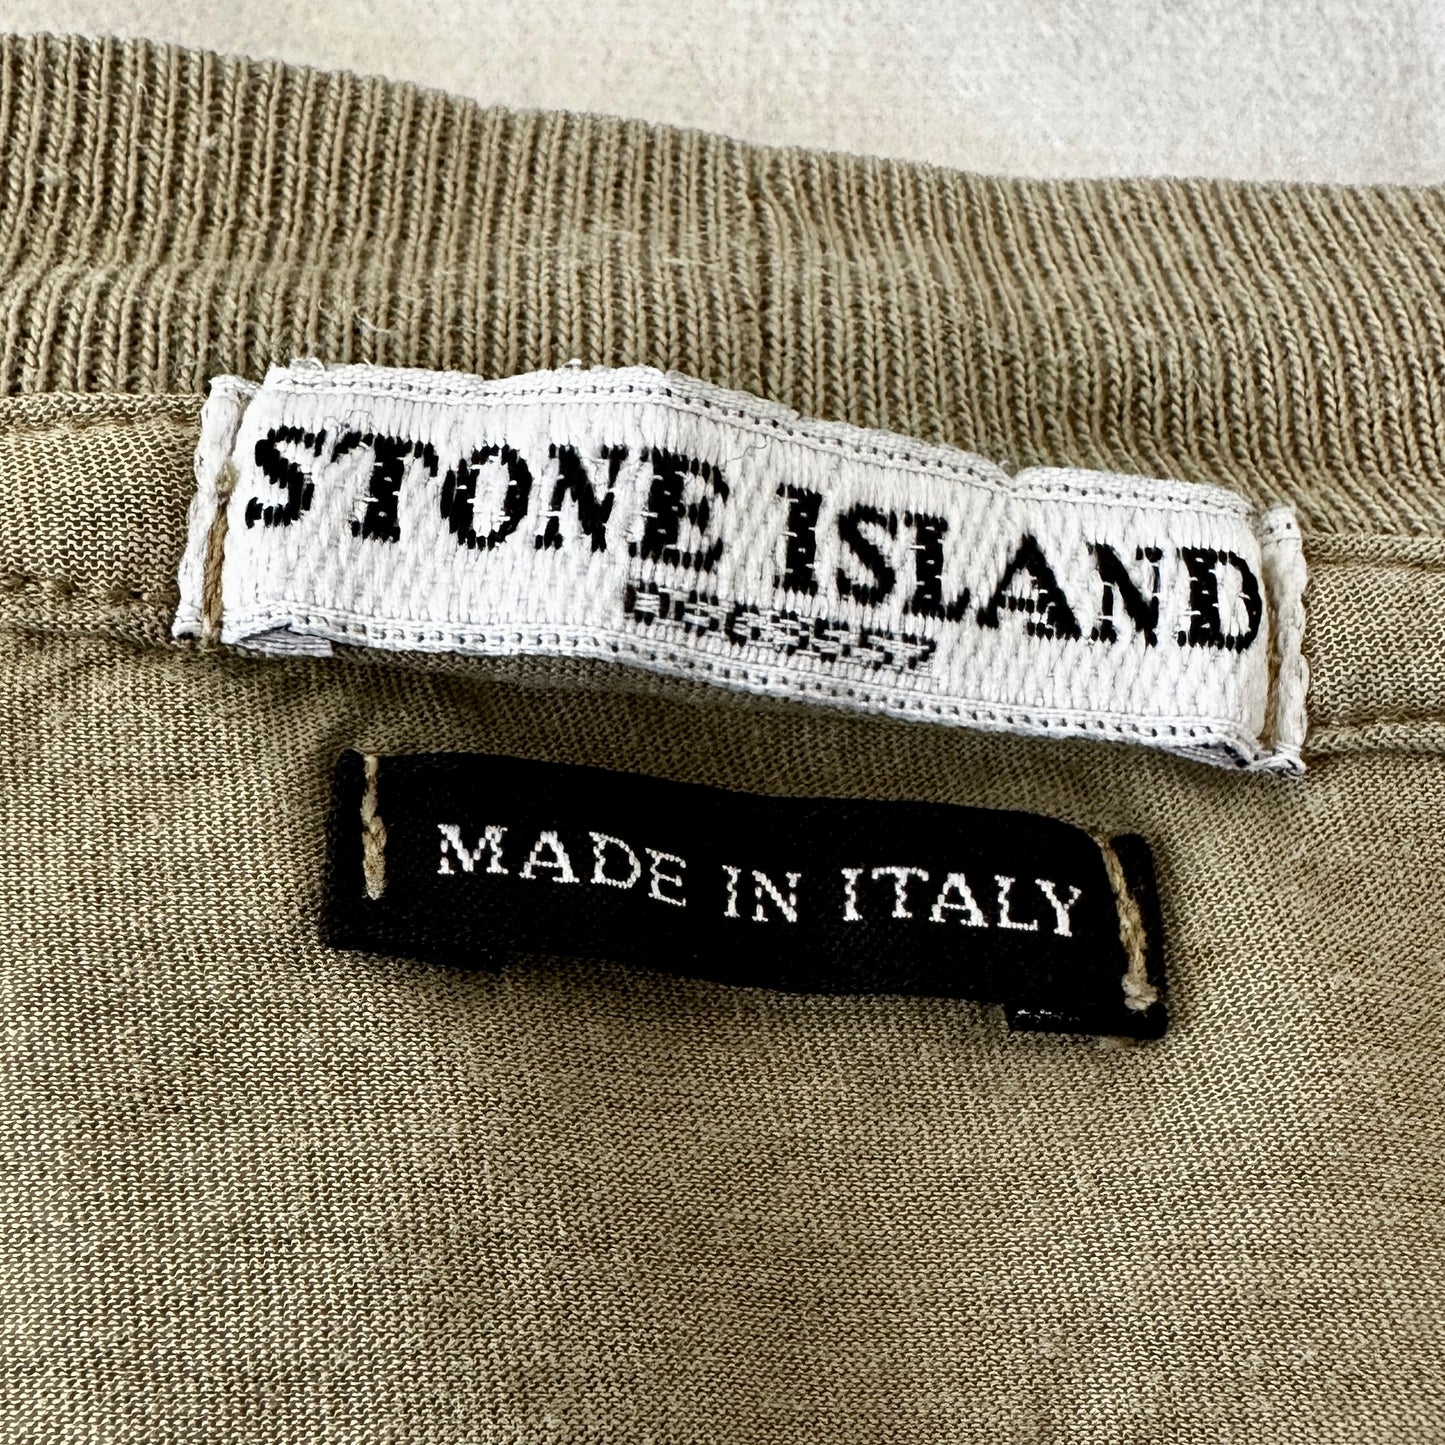 Stone Island Italy T-Shirt - XXL - Made in Italy